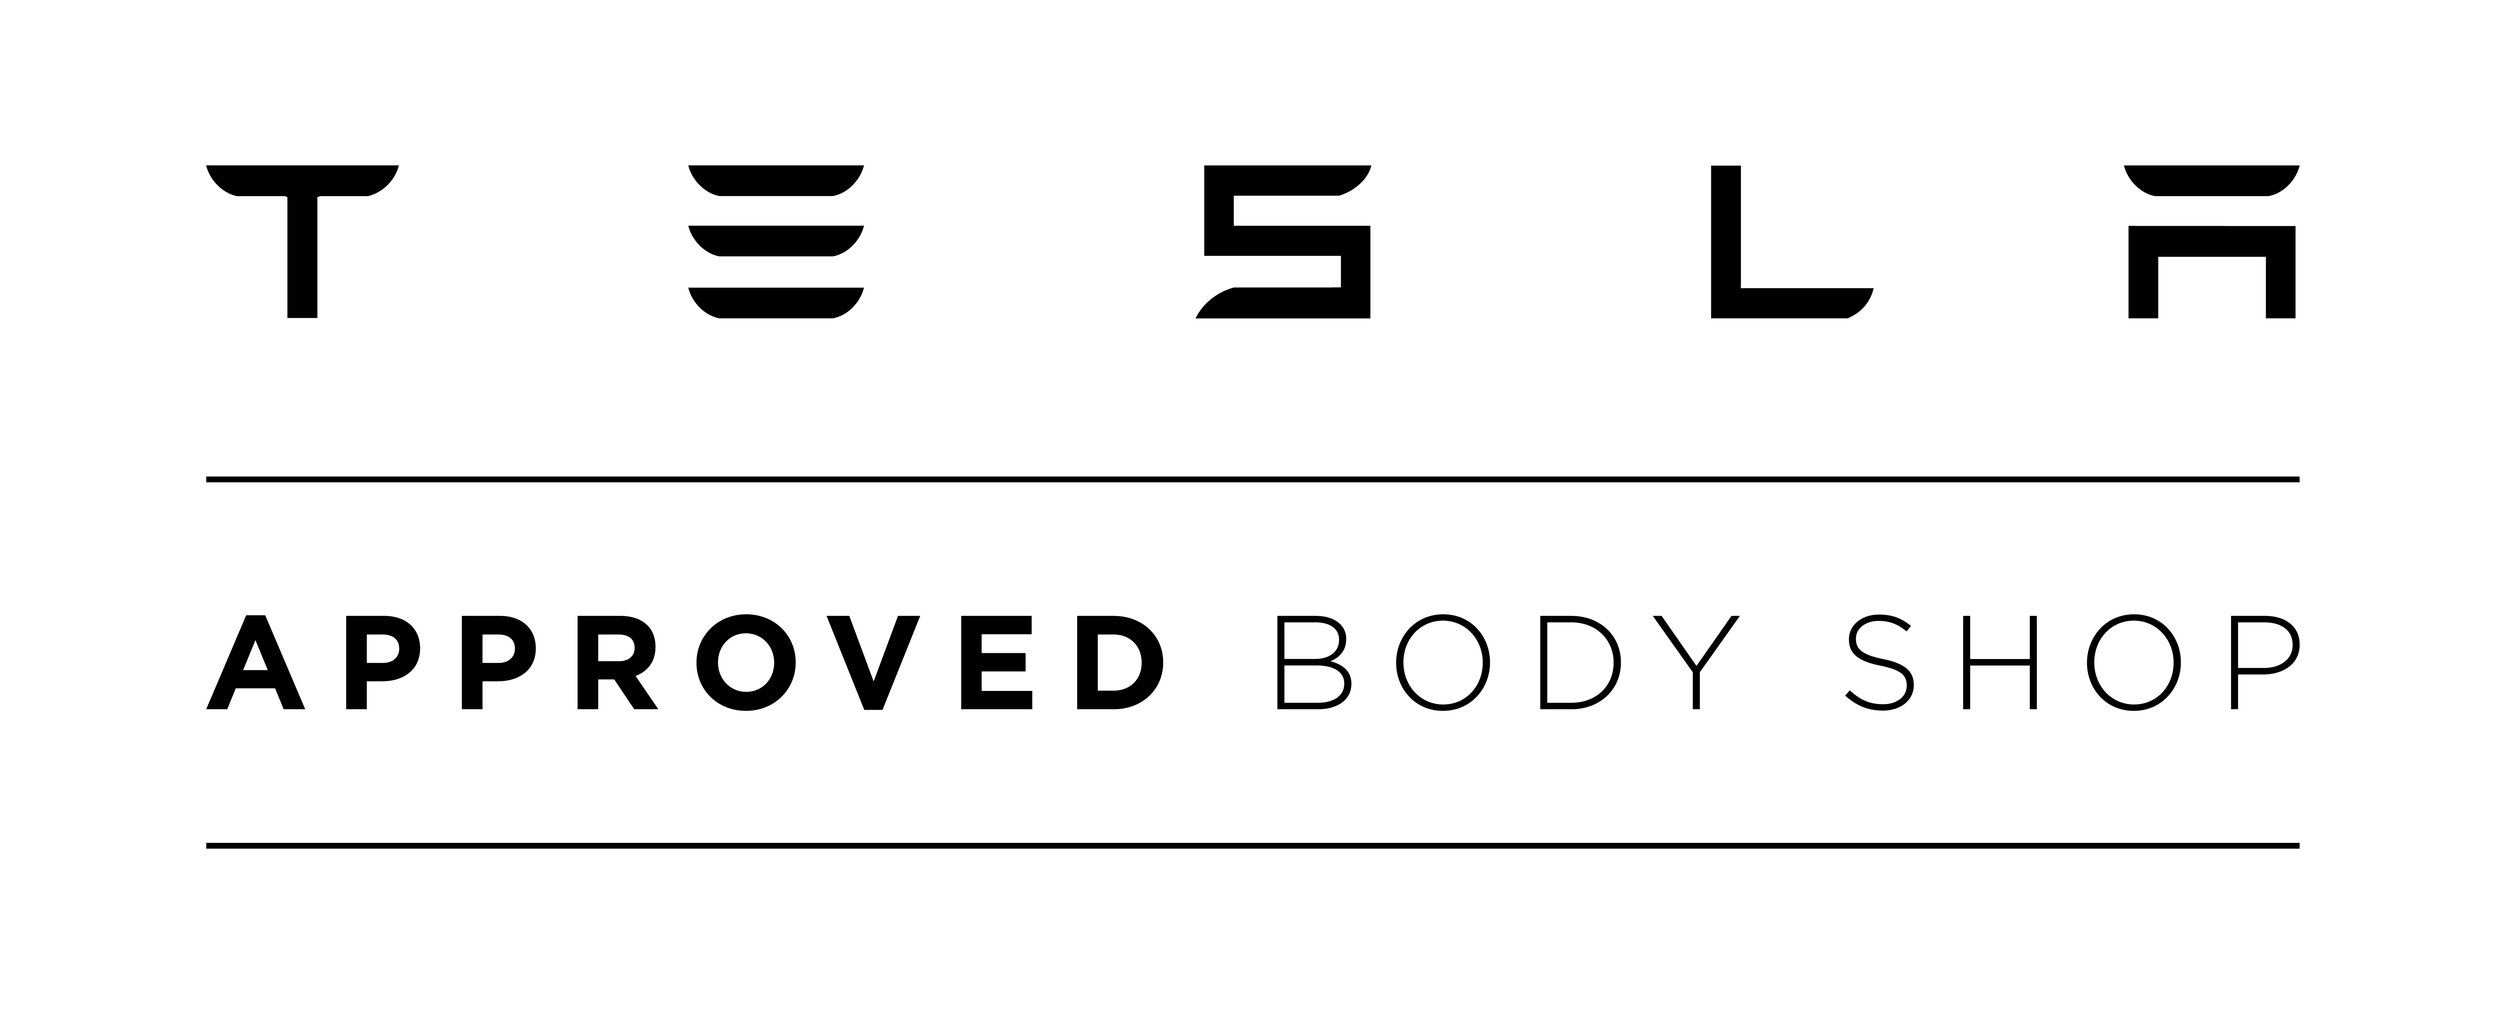 tesla approved body shop - high res.jpg